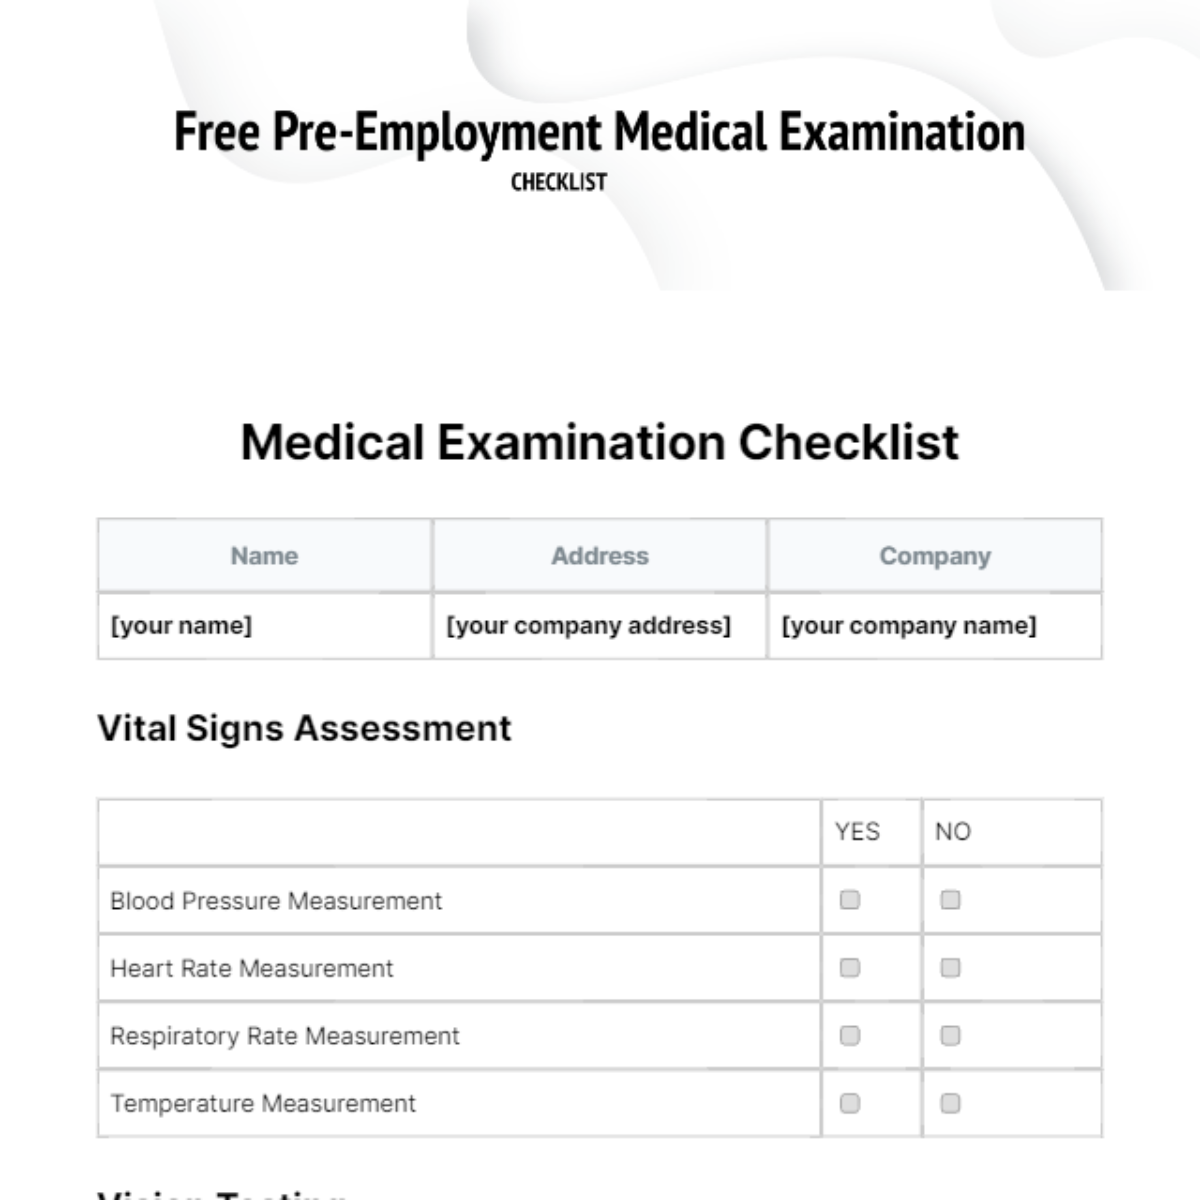 Free Pre-Employment Medical Examination Checklist Template